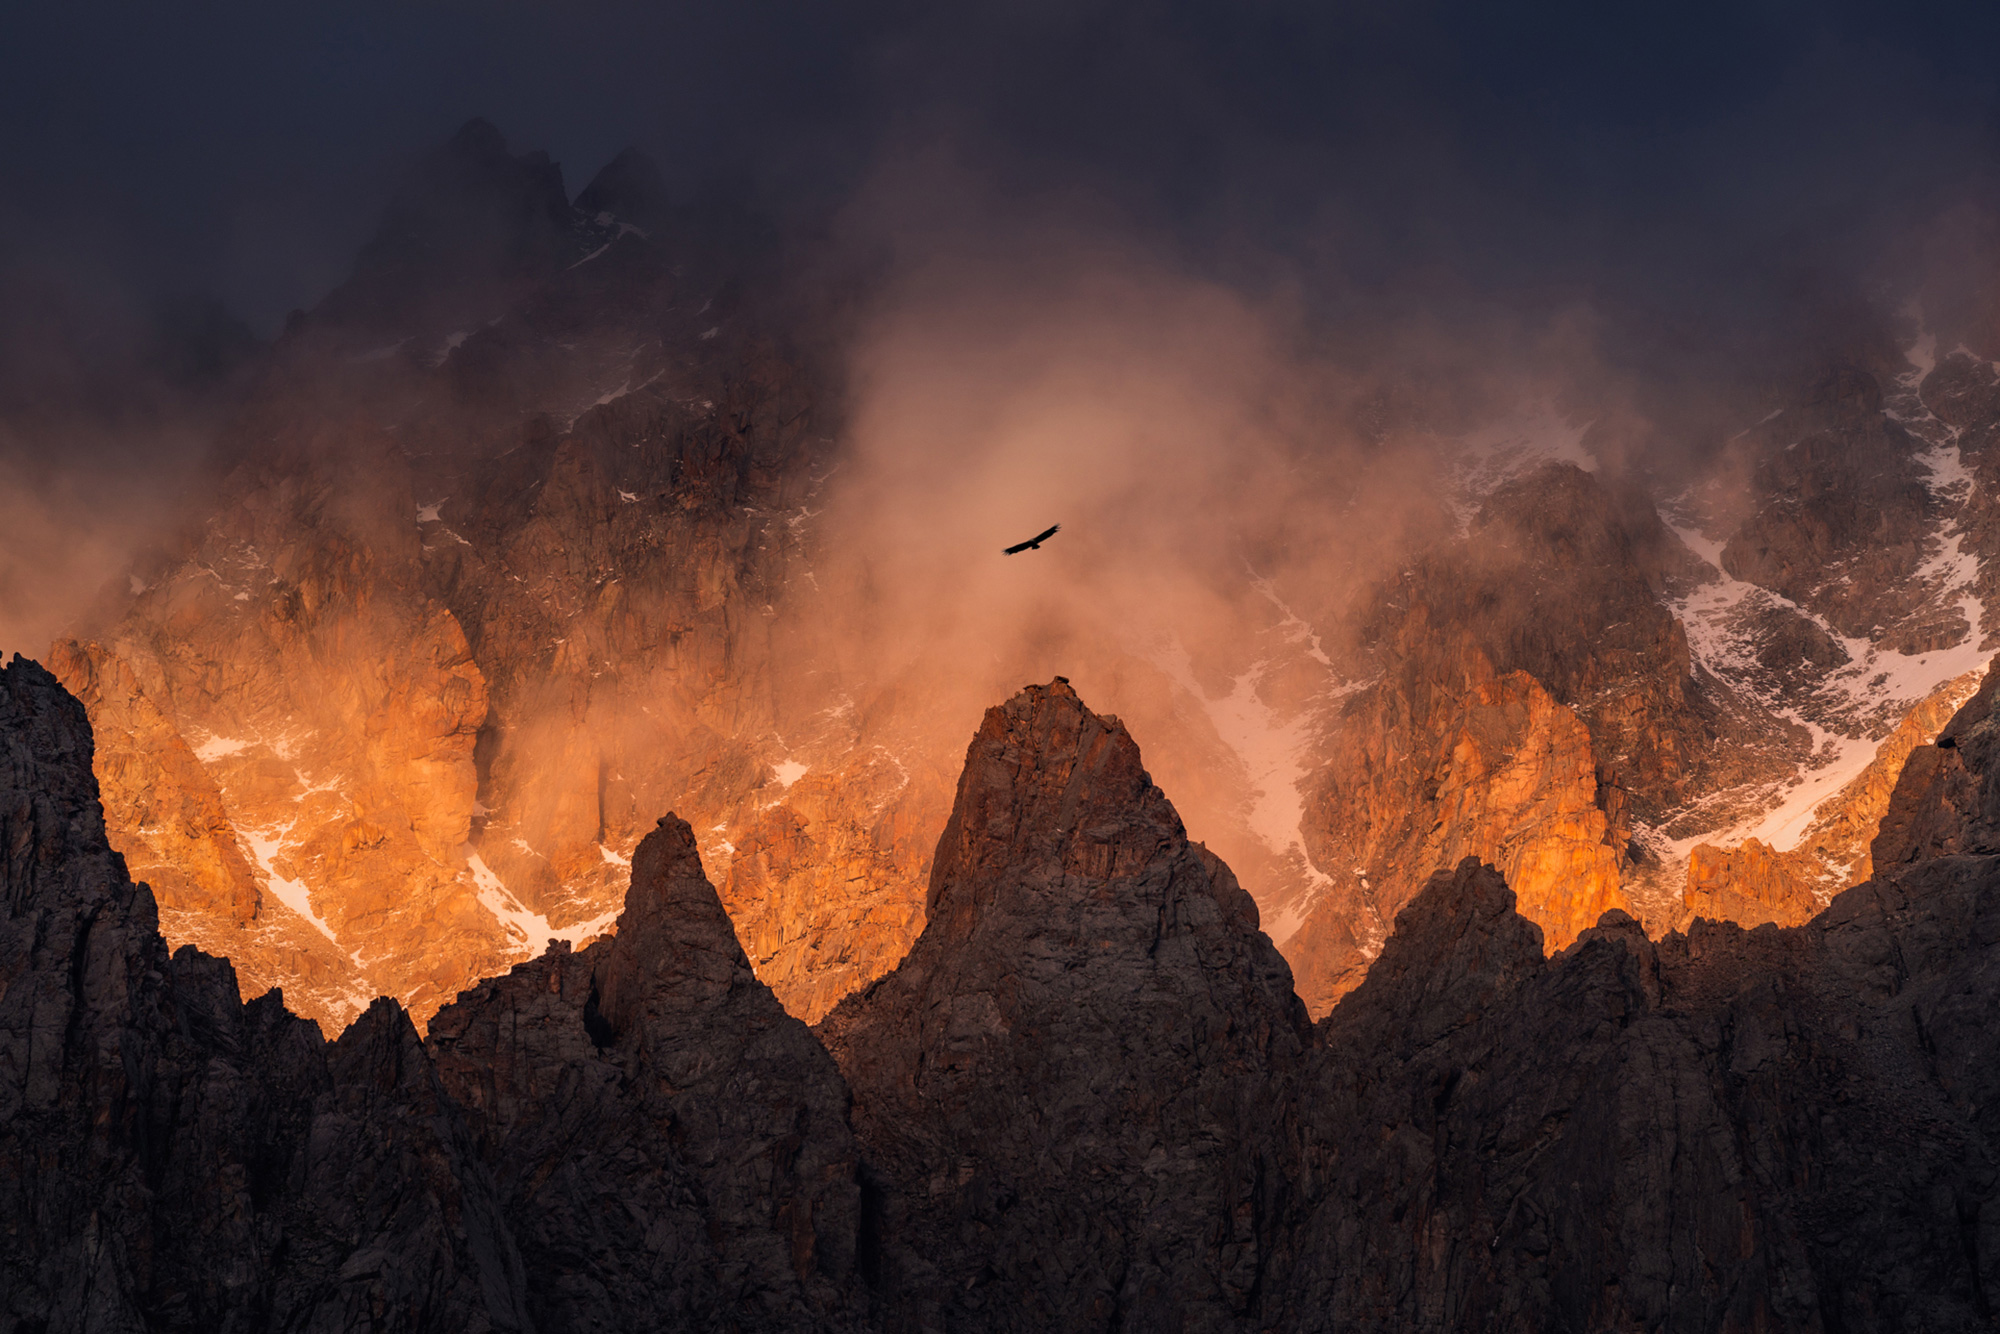 albert-dros-sony-alpha-7RIII-an-eagle-soars-above-volcanic-mountains-illuminated-in-fiery-orange.jpeg